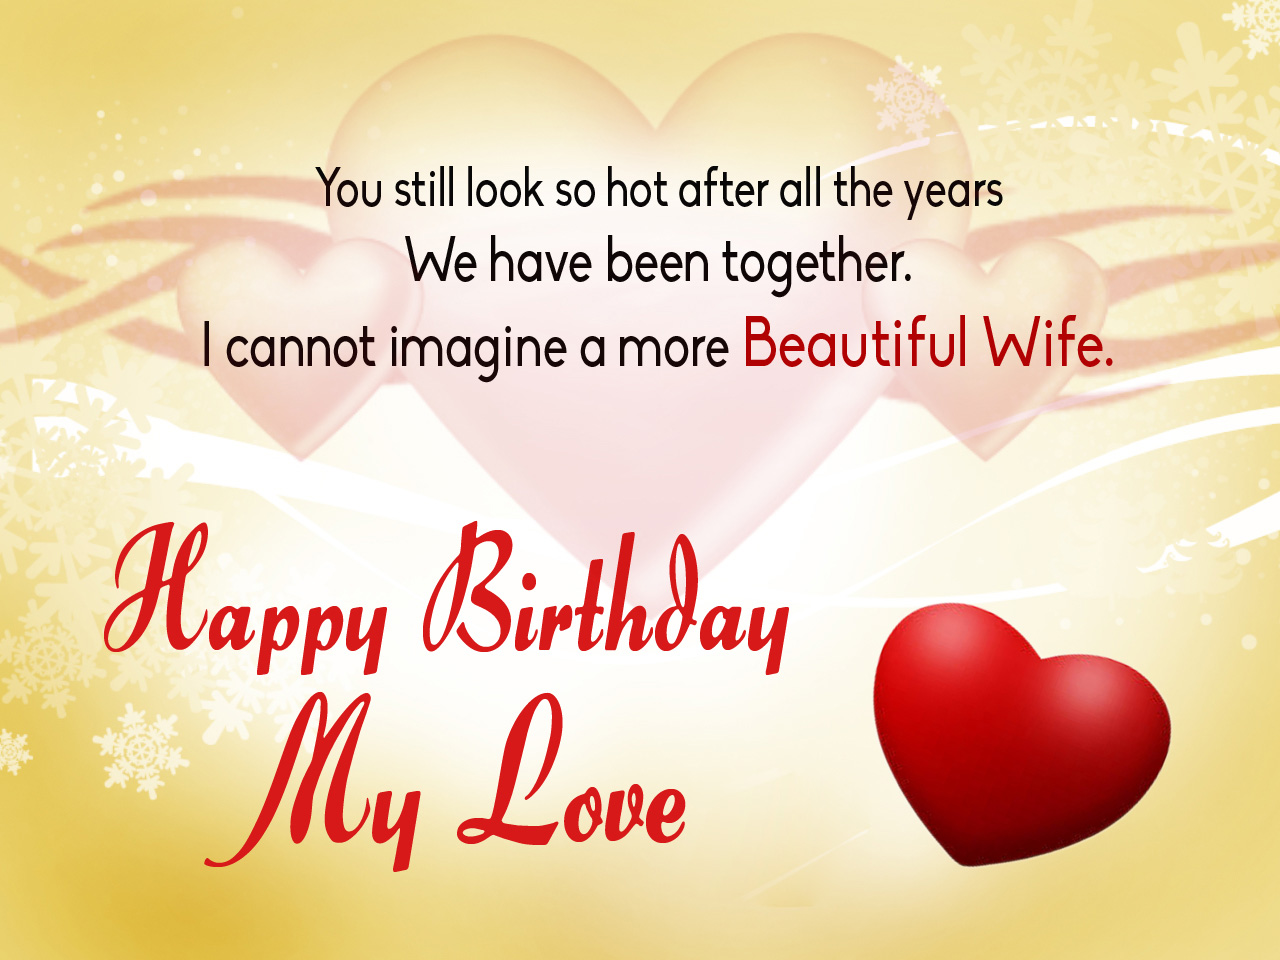 wife-birthday-card-happy-birthday-wishes-memes-sms-greeting-ecard